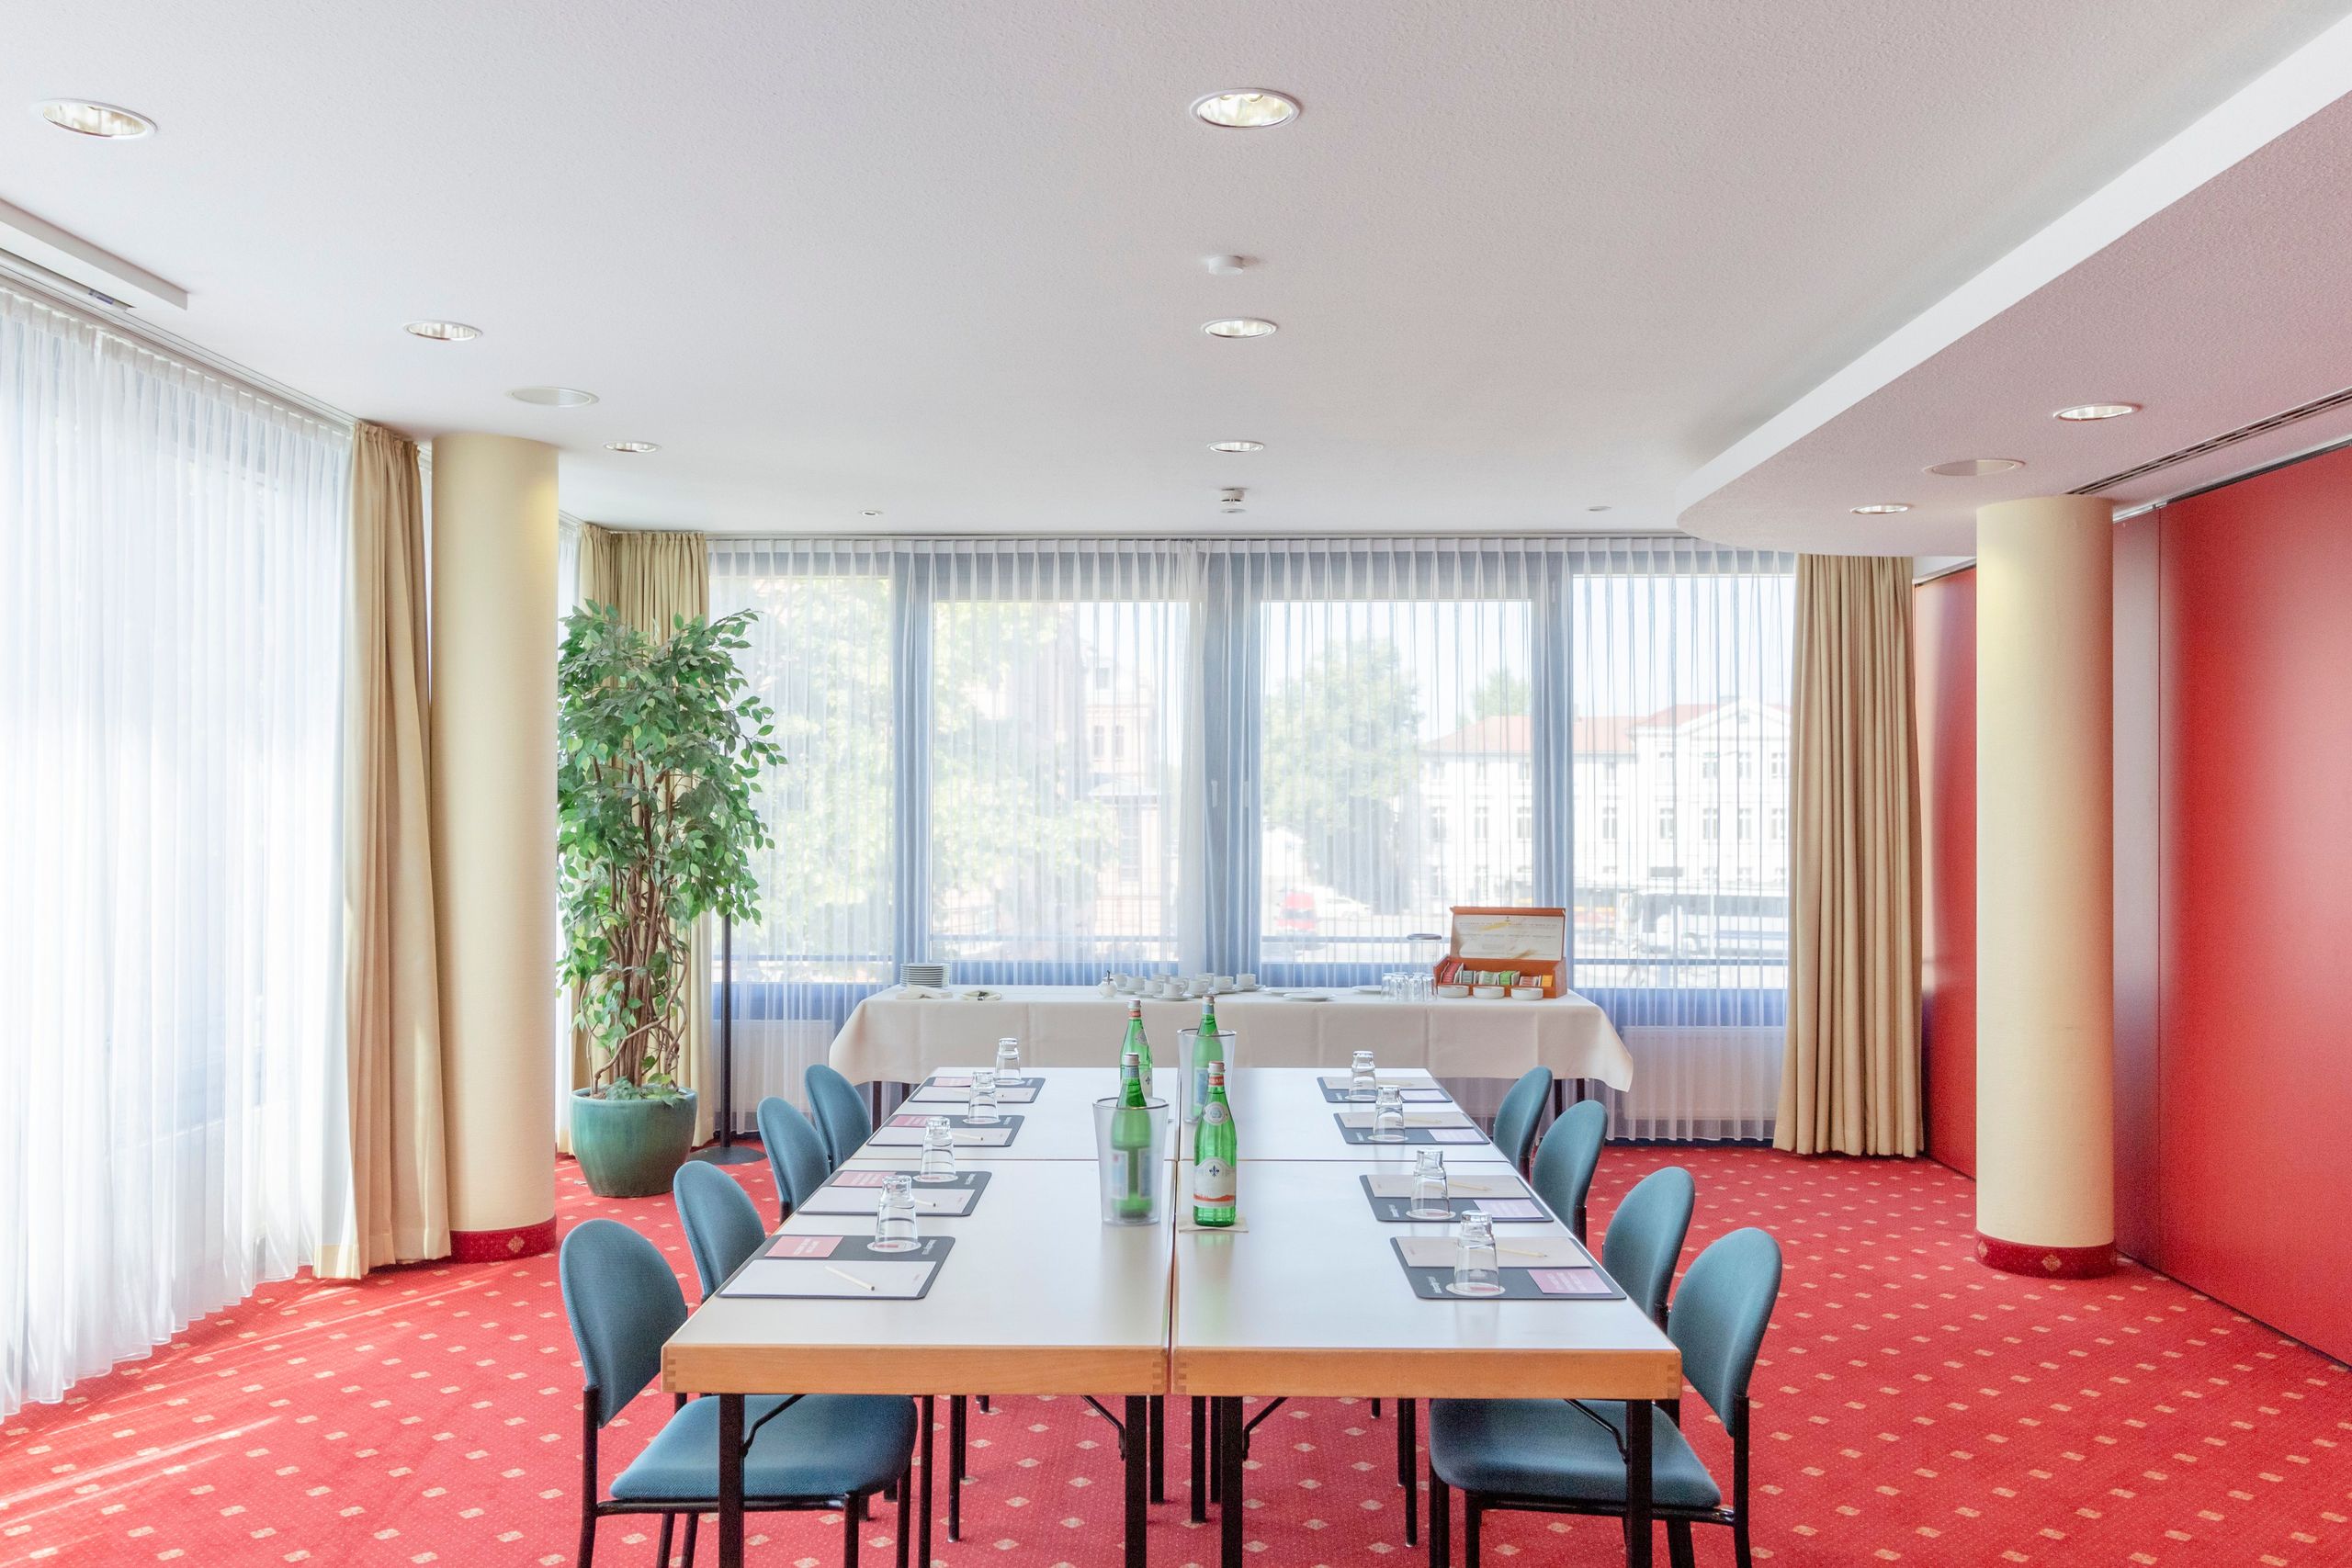 IntercityHotel Schwerin - vergaderingen